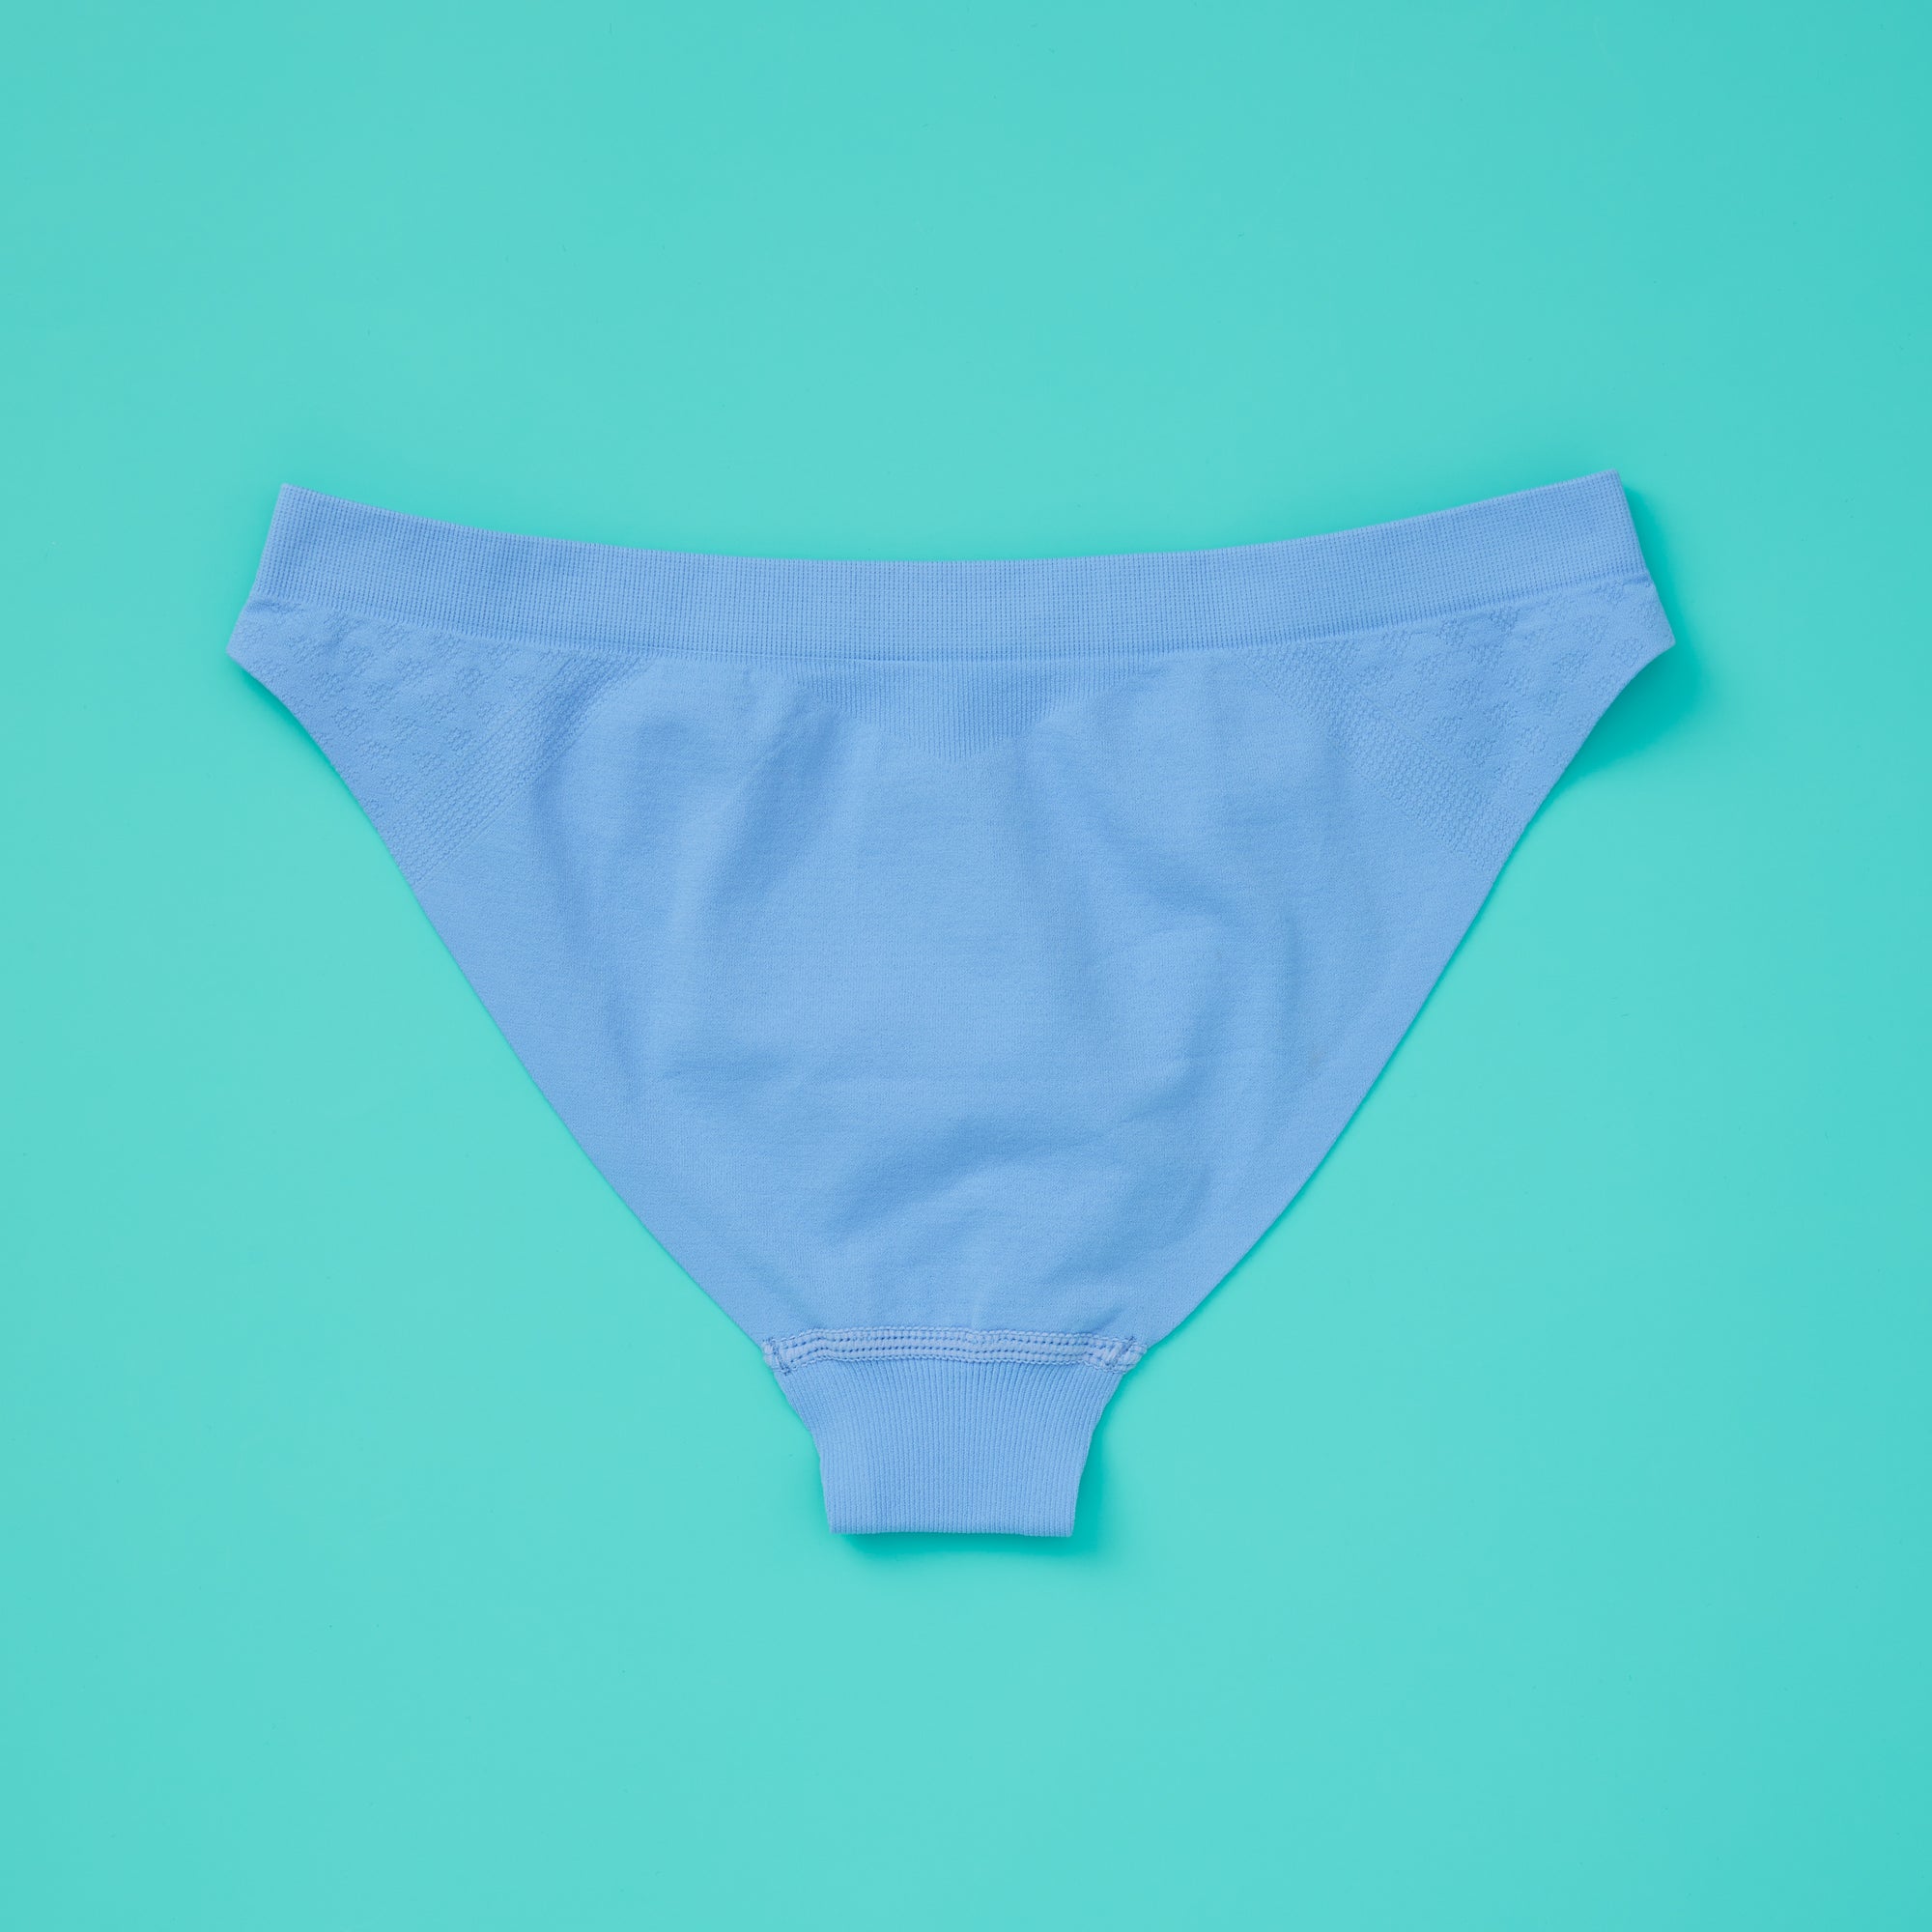 NEW Yellowberry Twistr Seamless Girls Underwear 6PK